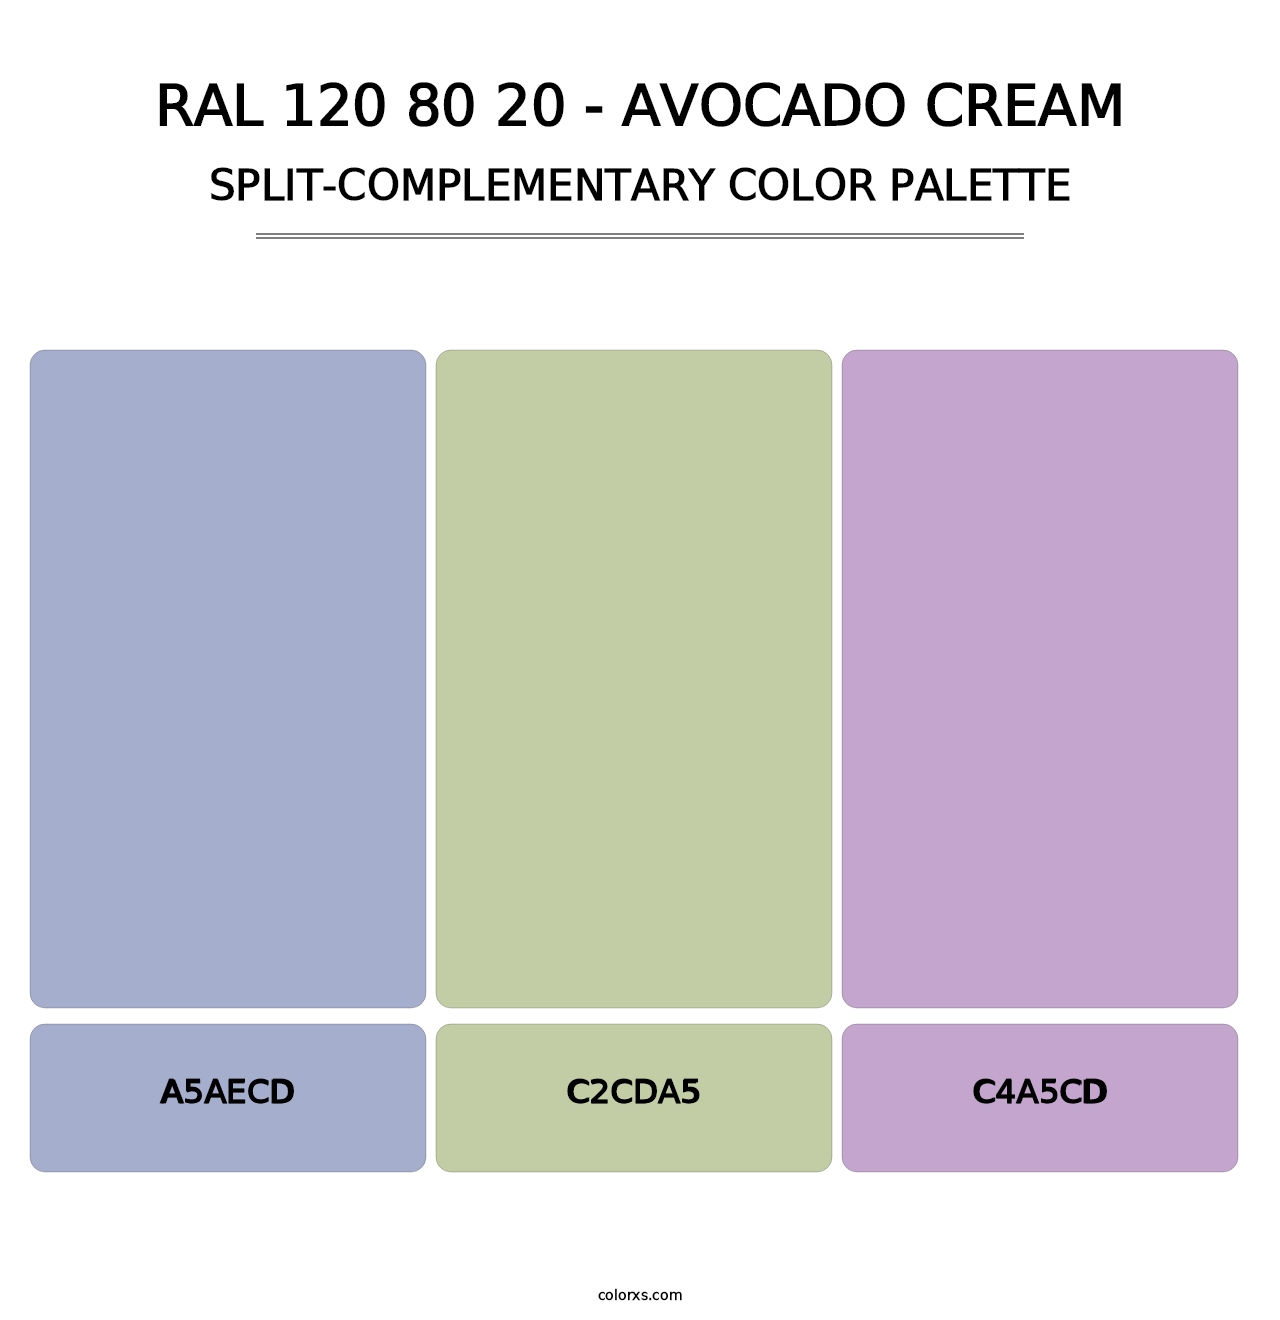 RAL 120 80 20 - Avocado Cream - Split-Complementary Color Palette